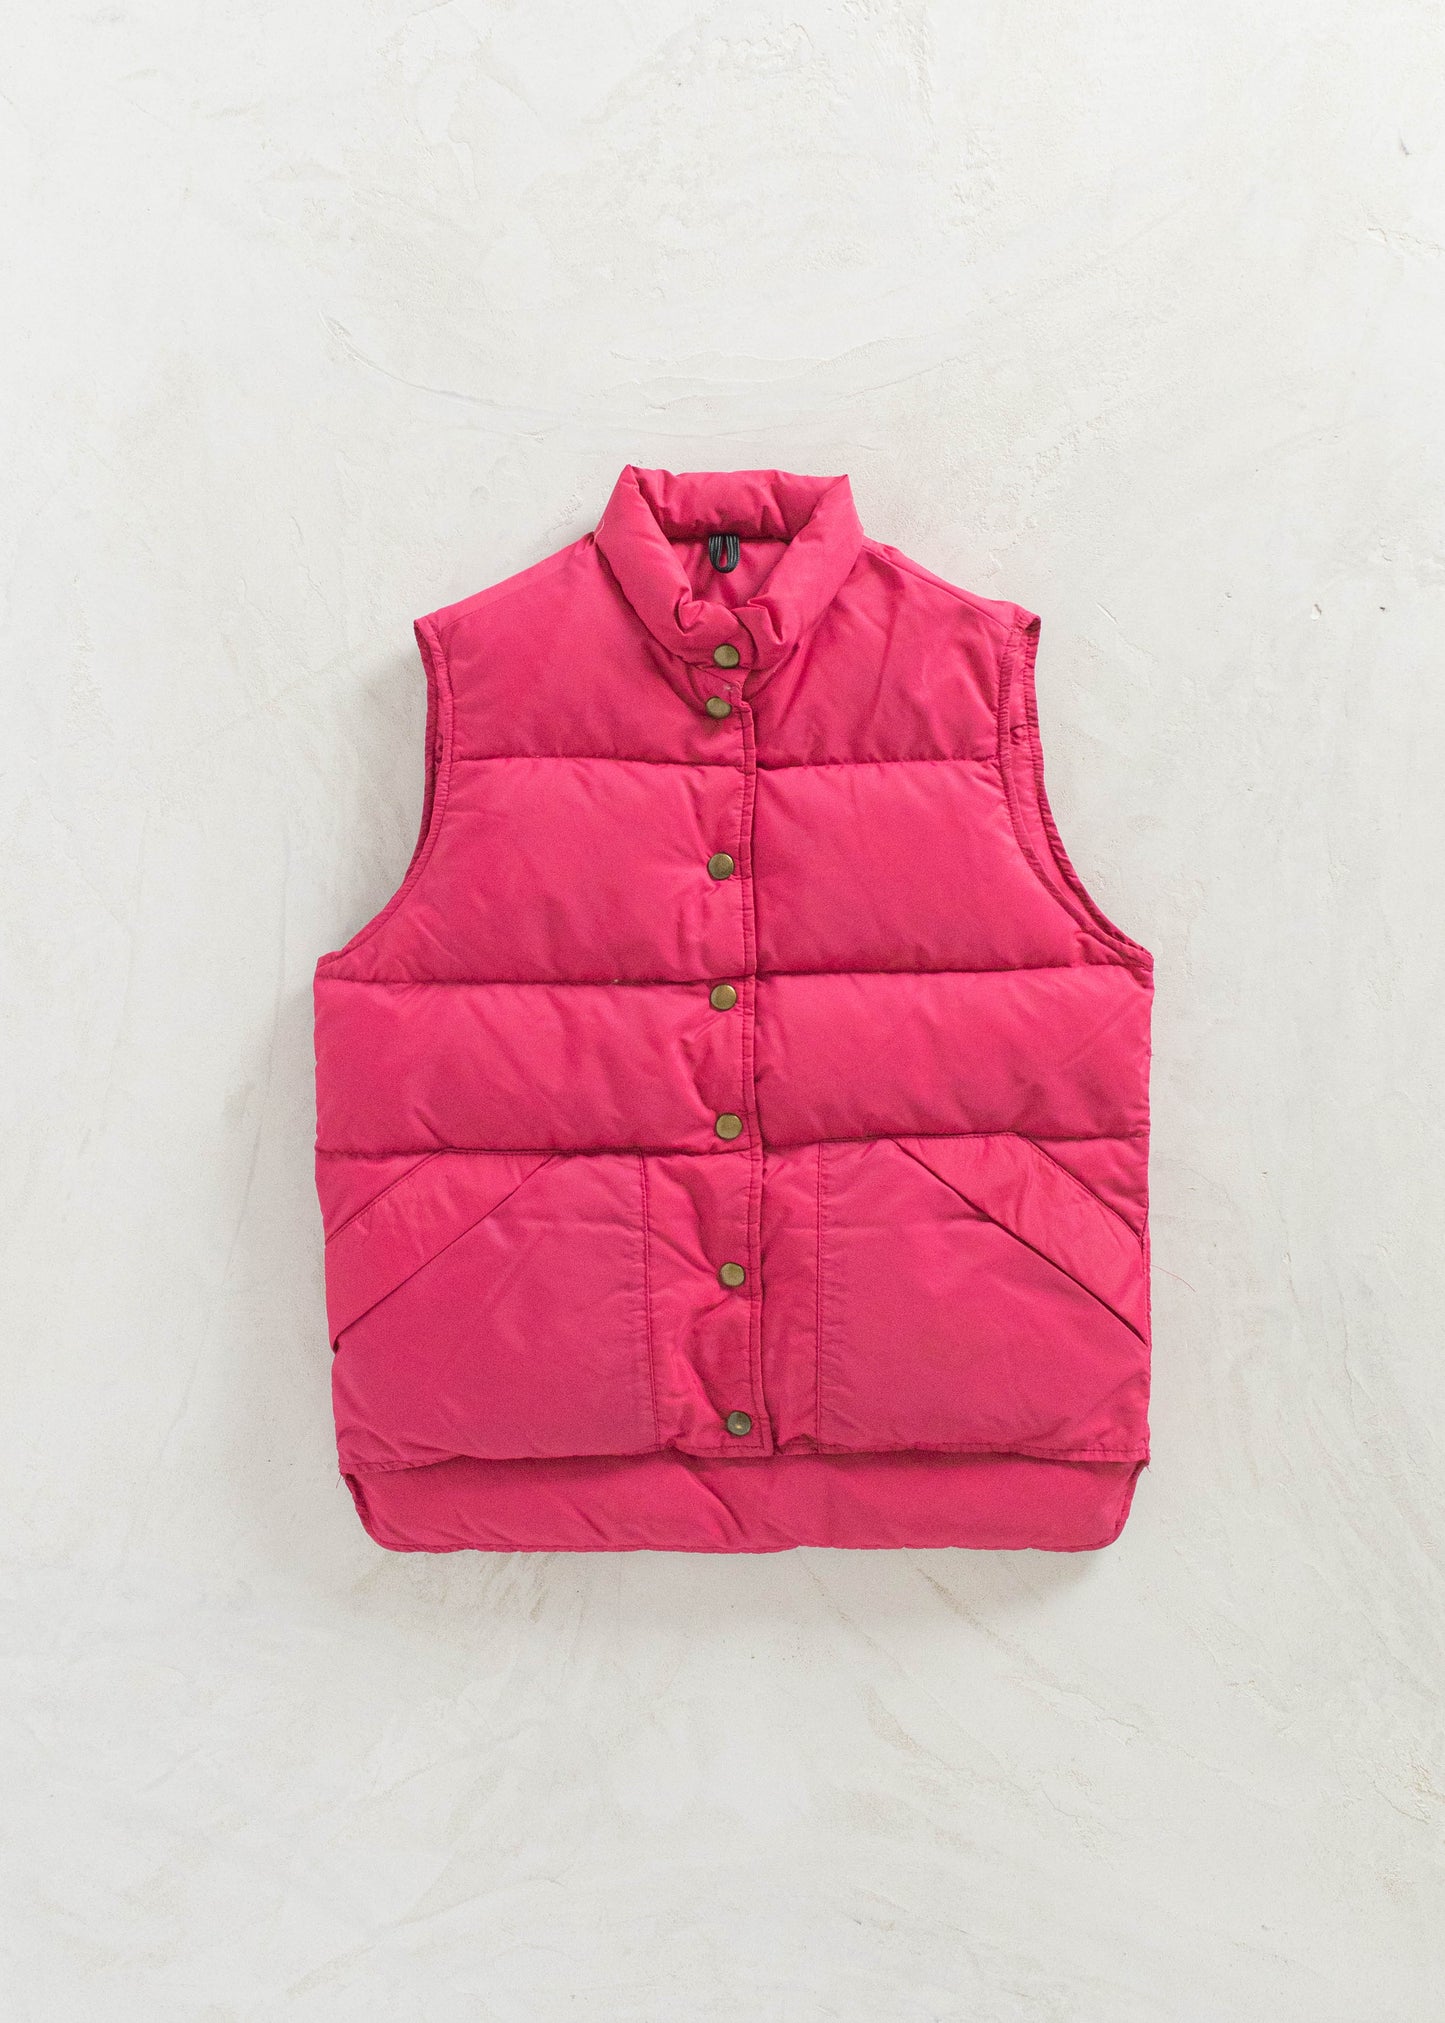 Vintage 1980s Woolrich Down Filled Vest Size S/M